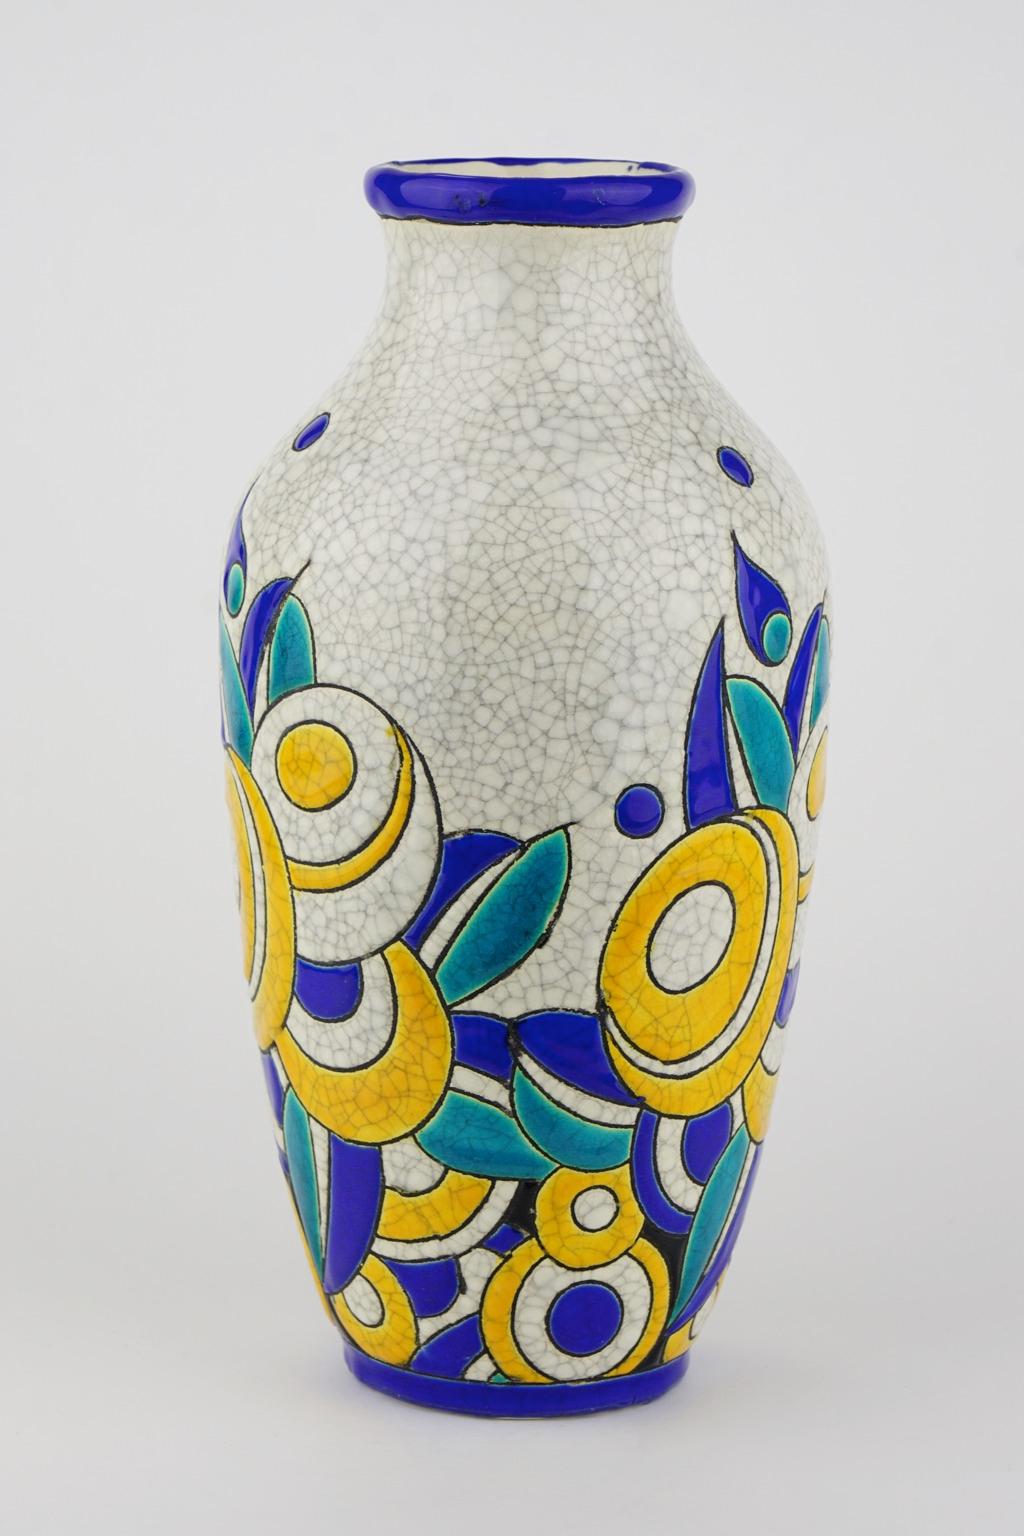 Art Deco Keramis Boch crackled enameled earthenware vase with geometric flower pattern. Marks D1175 and F806. Size: H. 27.6 cm. Top diameter 7.3 cm bottom diameter 8 cm.